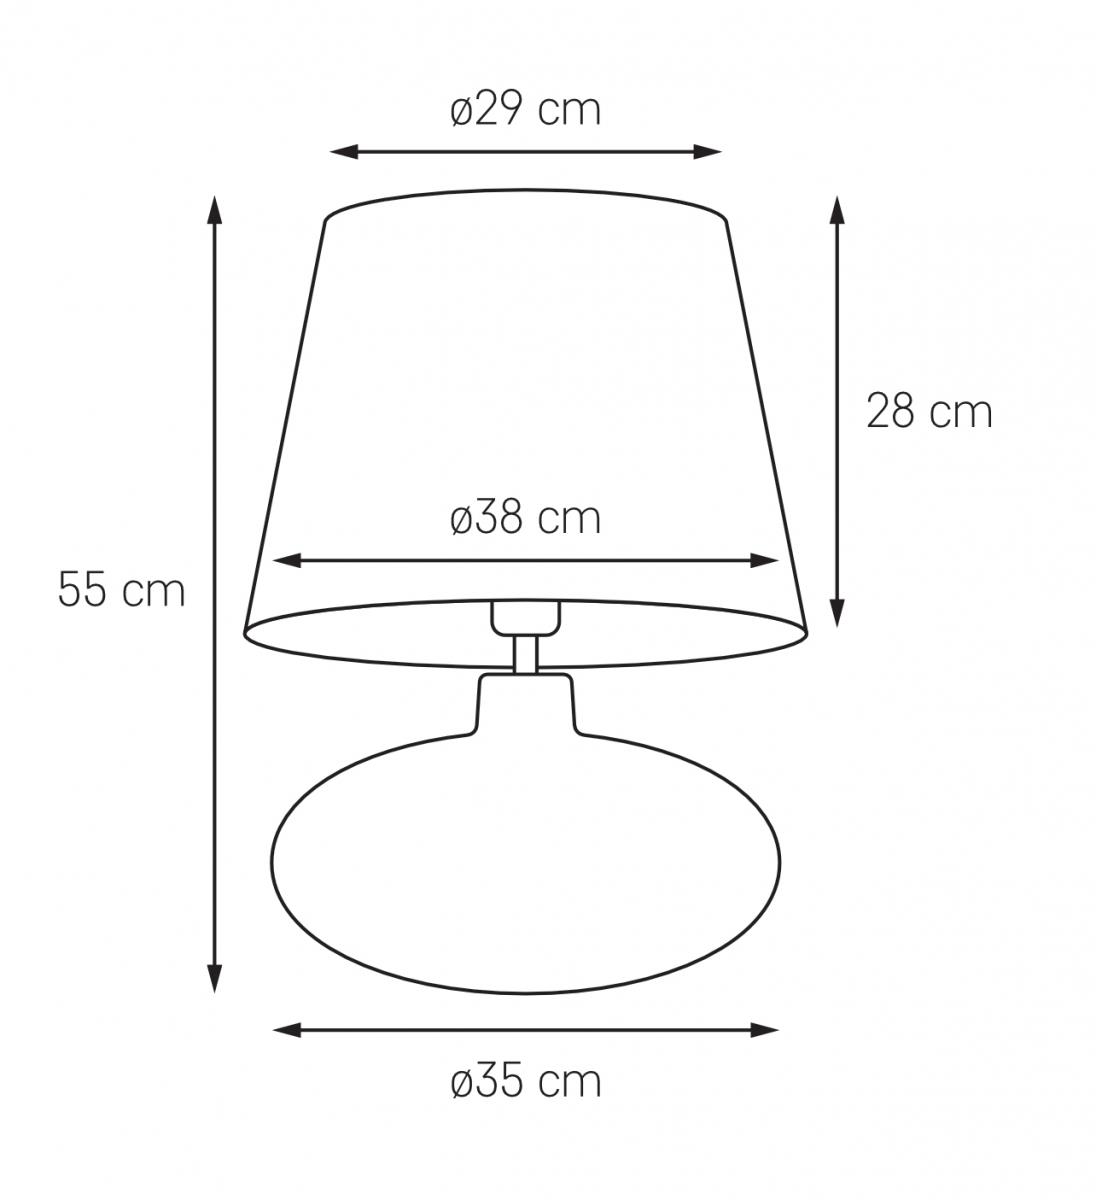 Lampa stołowa SAWA szara, transparentna podstawa